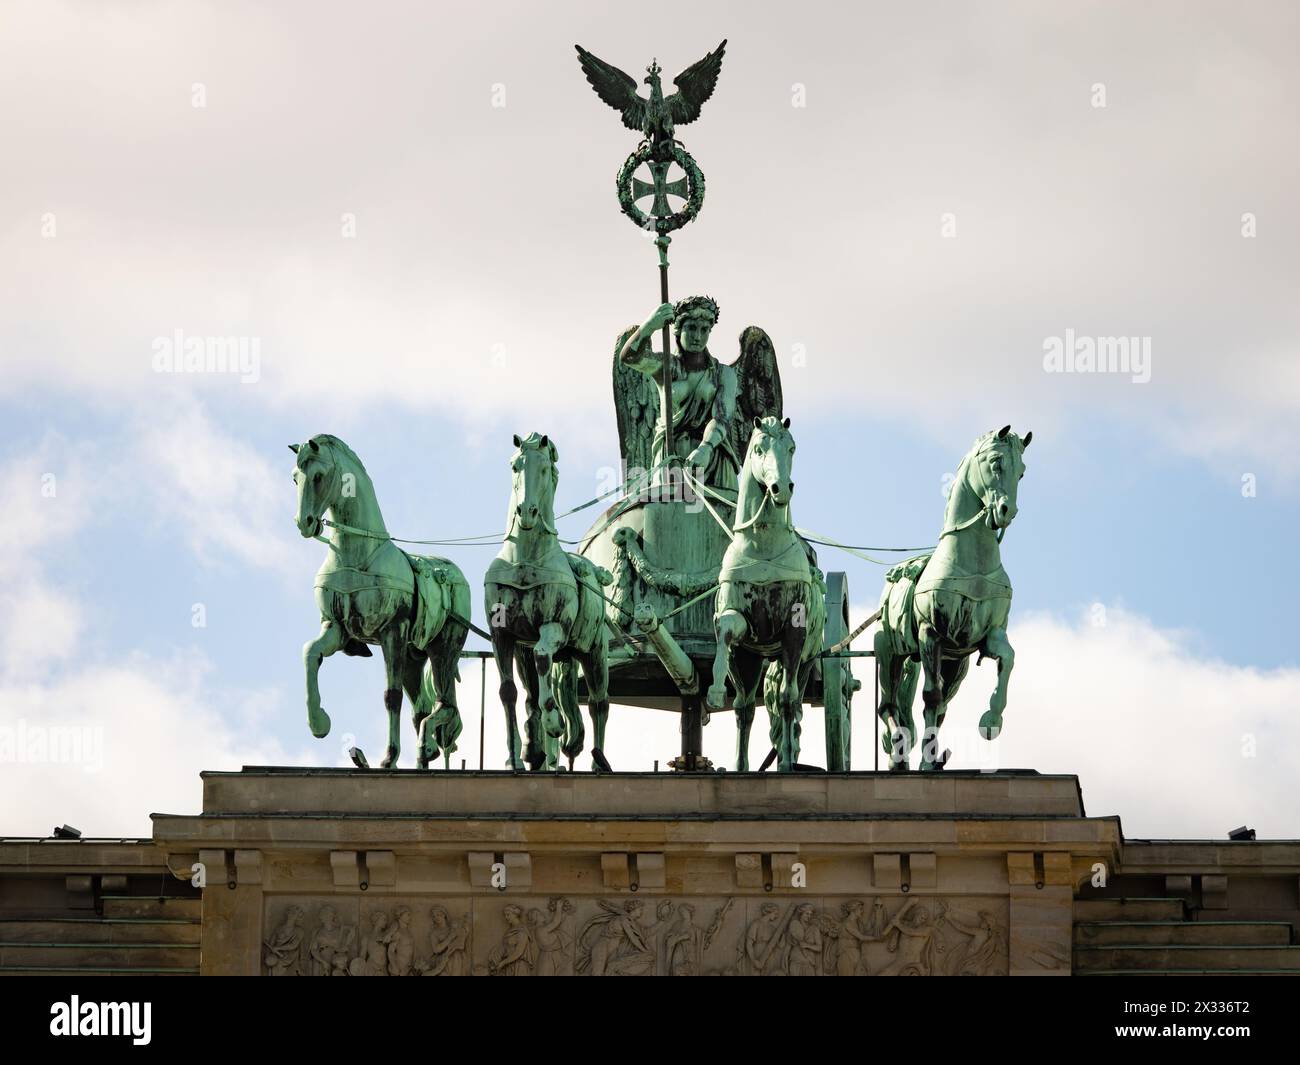 Quadriga sculpture group on the Brandenburger Tor building exterior in Berlin, Germany. The bronze art piece is made by Johann Gottfried Schadow. Stock Photo